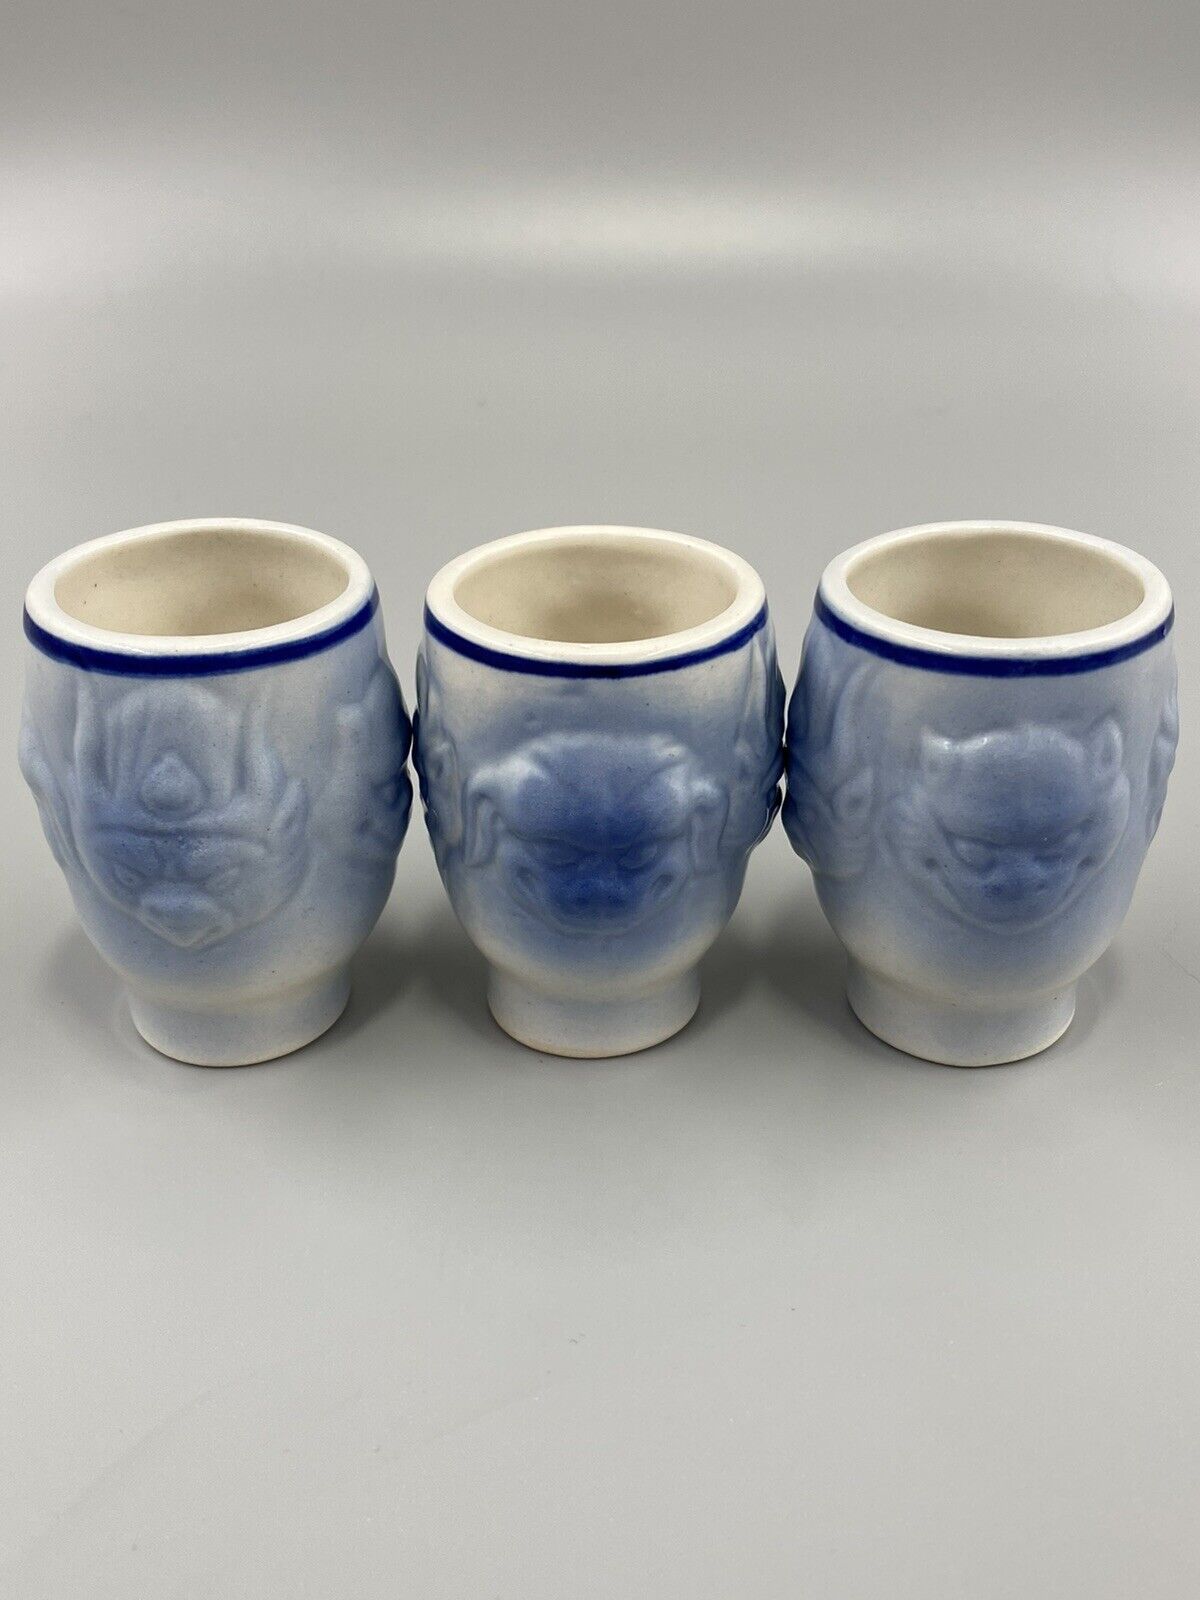 3 Rare 2.5” Saki Cups Blue Asian Dragon Faces Design - Shot Glasses Tea Cups HTF